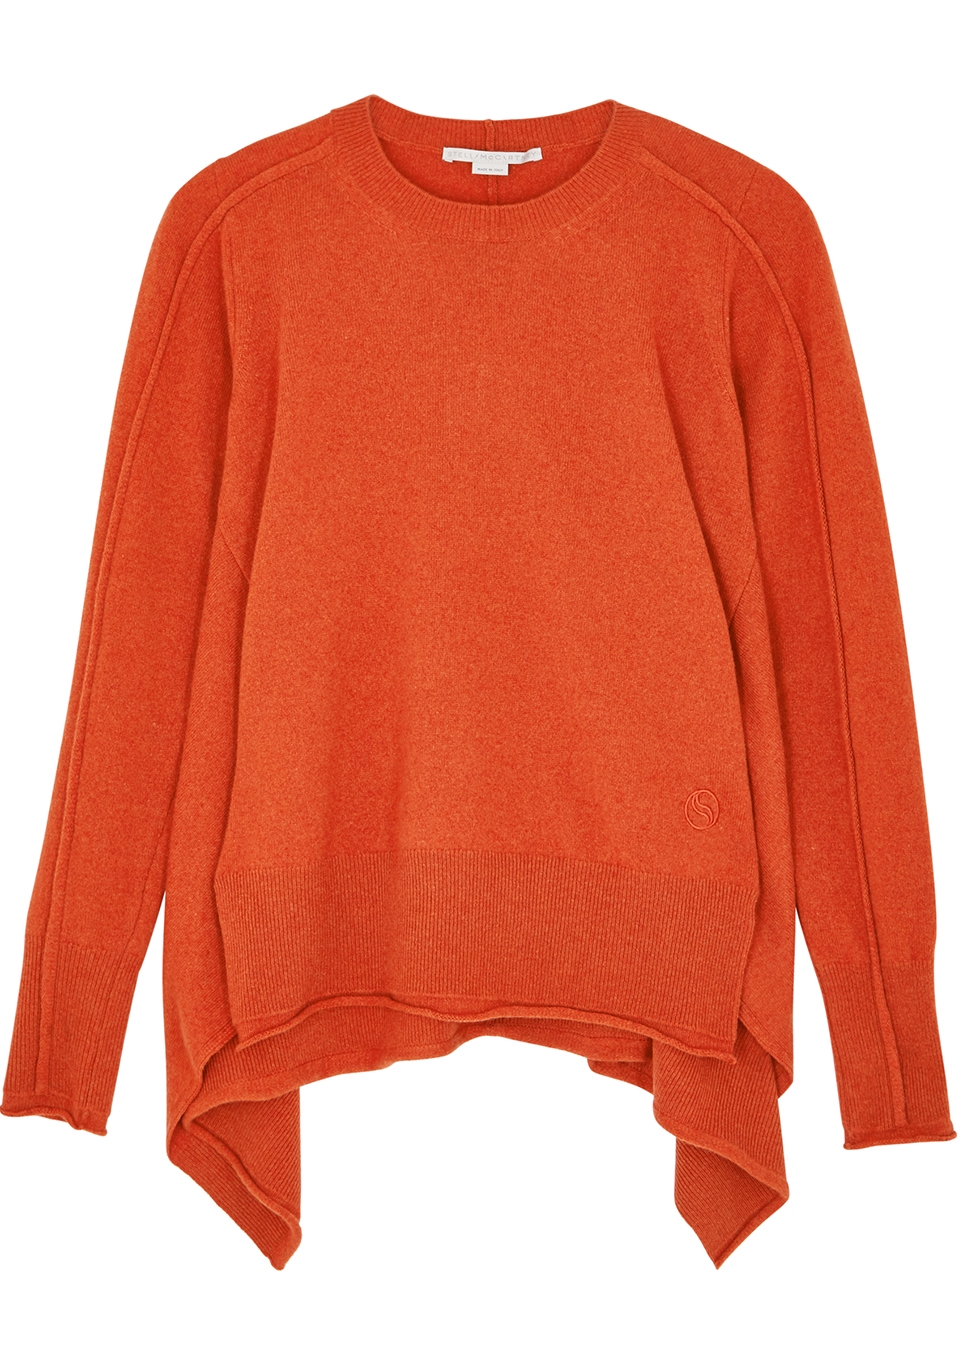 Stella McCartney Orange cashmere-blend jumper